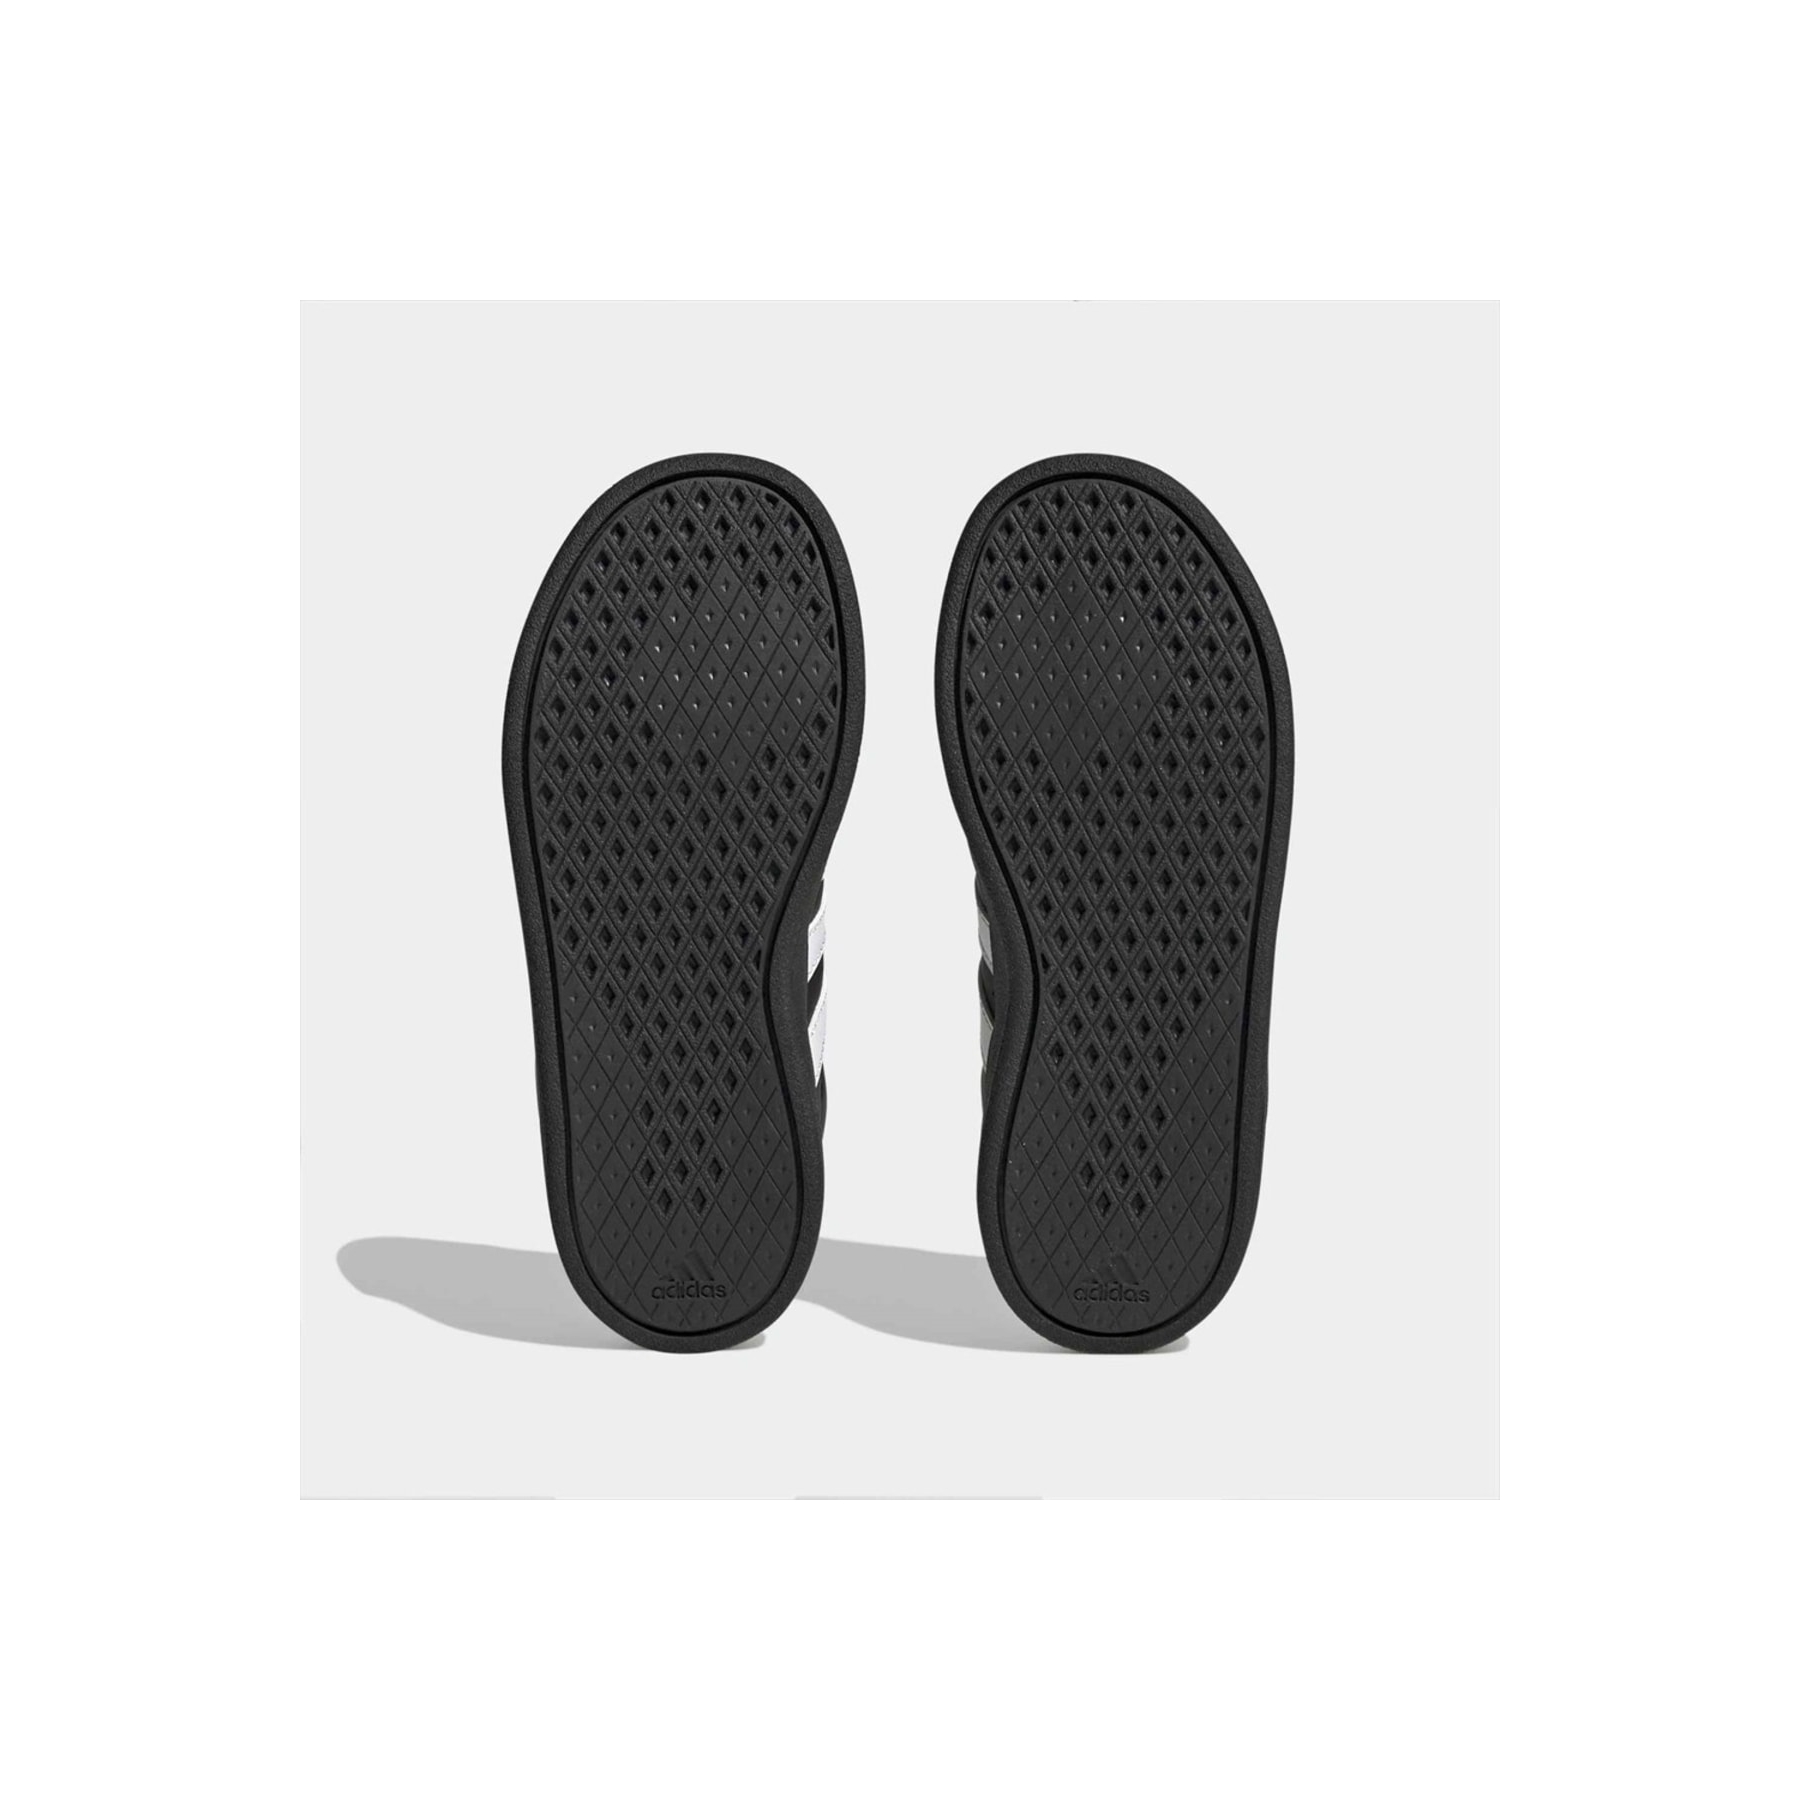 adidas Breaknet 2.0 Siyah Spor Ayakkabı (HP8961)